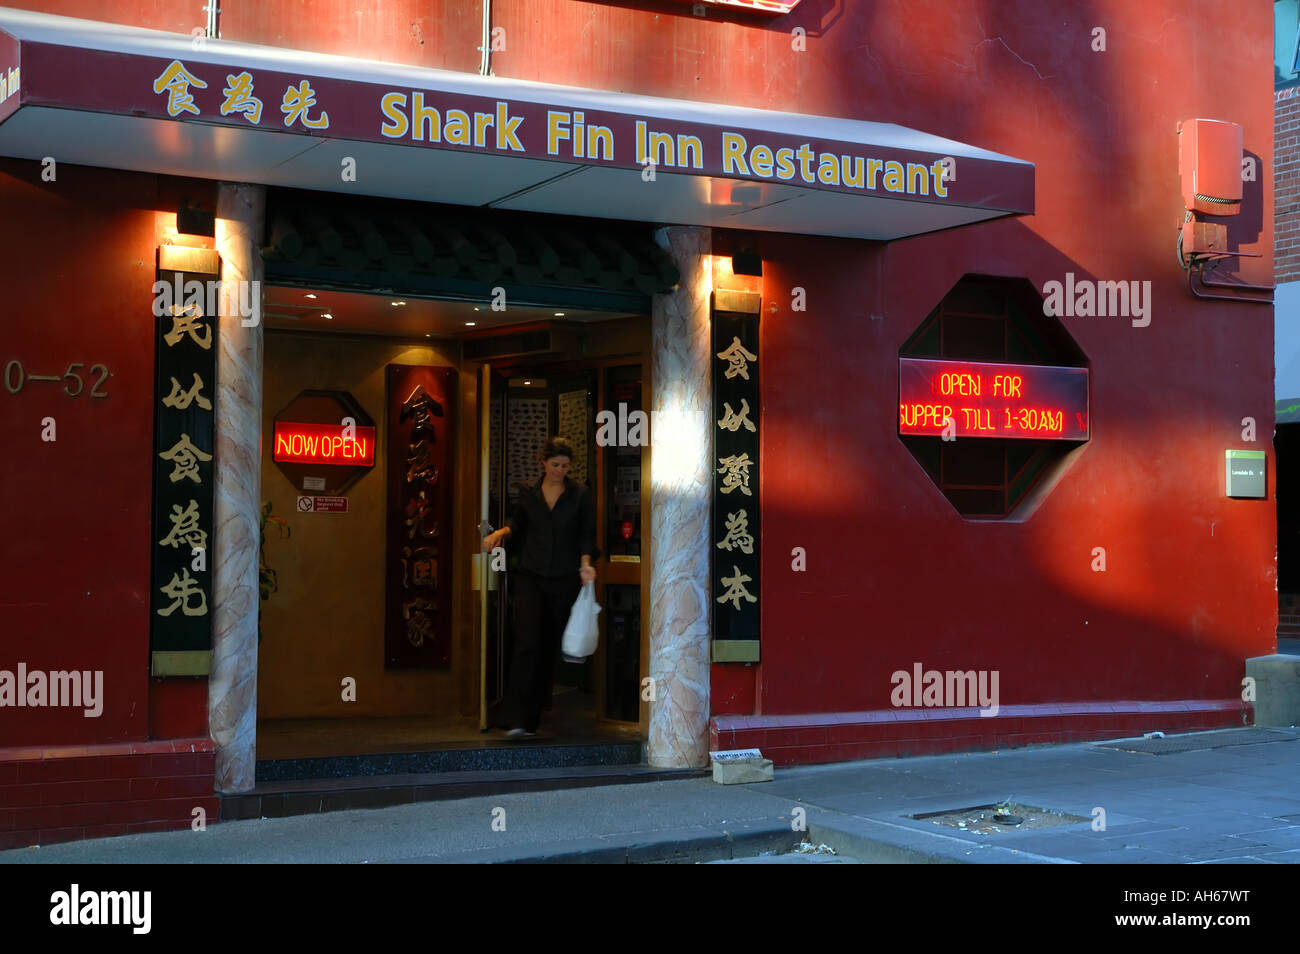 Pinna di squalo Inn ristorante Cinese che propone zuppa di pinne di pescecane Little Bourke St Melbourne Australia n. PR Foto Stock